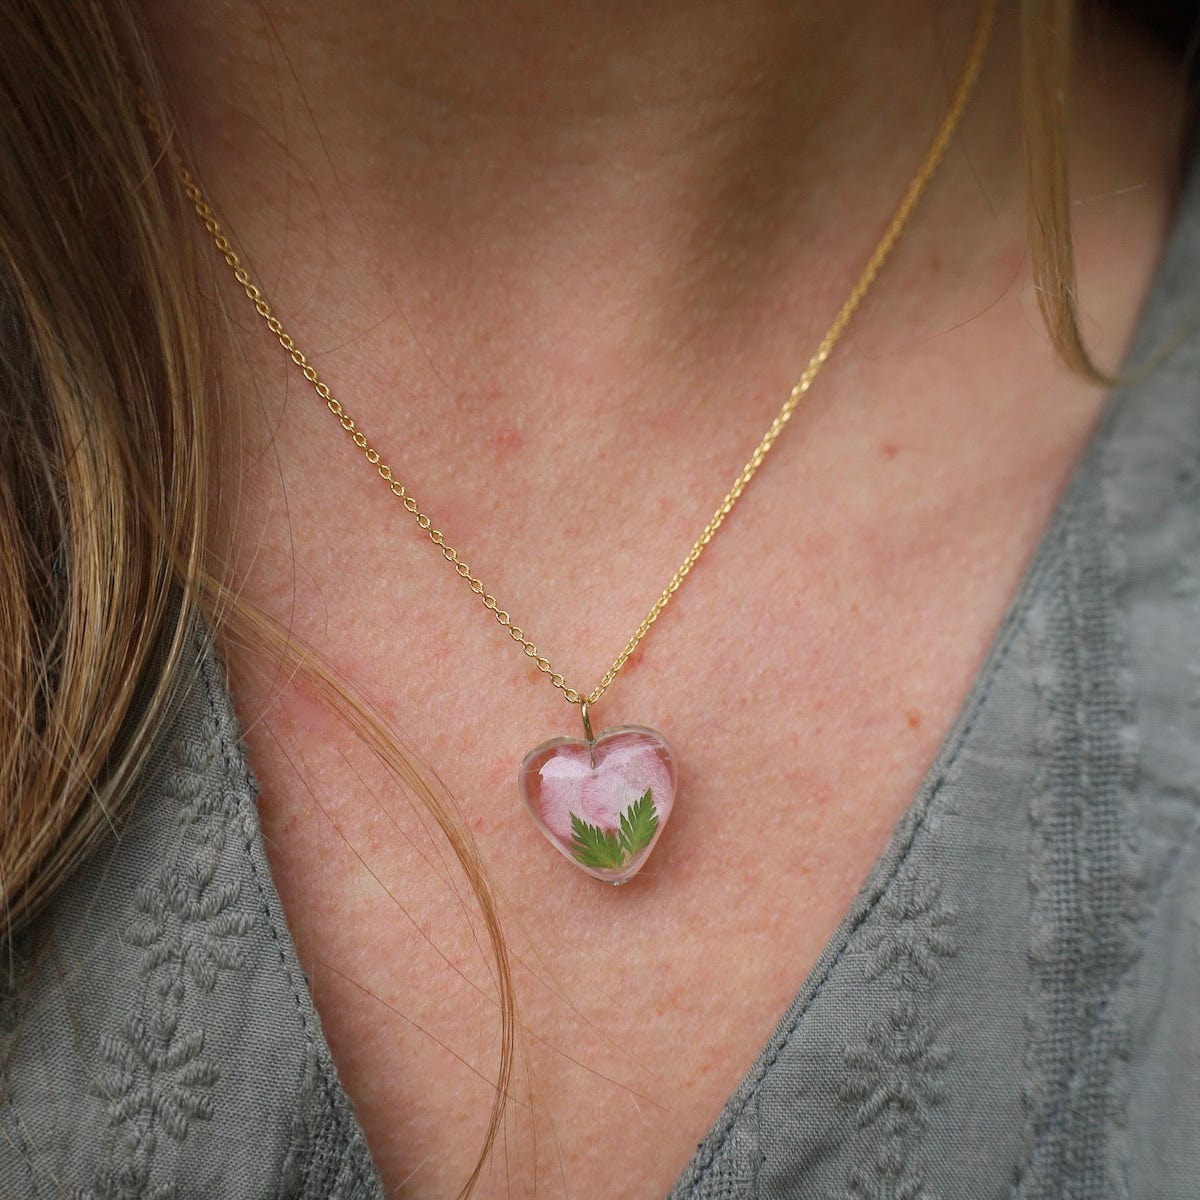 NKL-GPL Botanical Mini Heart Necklace - June Rose Birthday Month